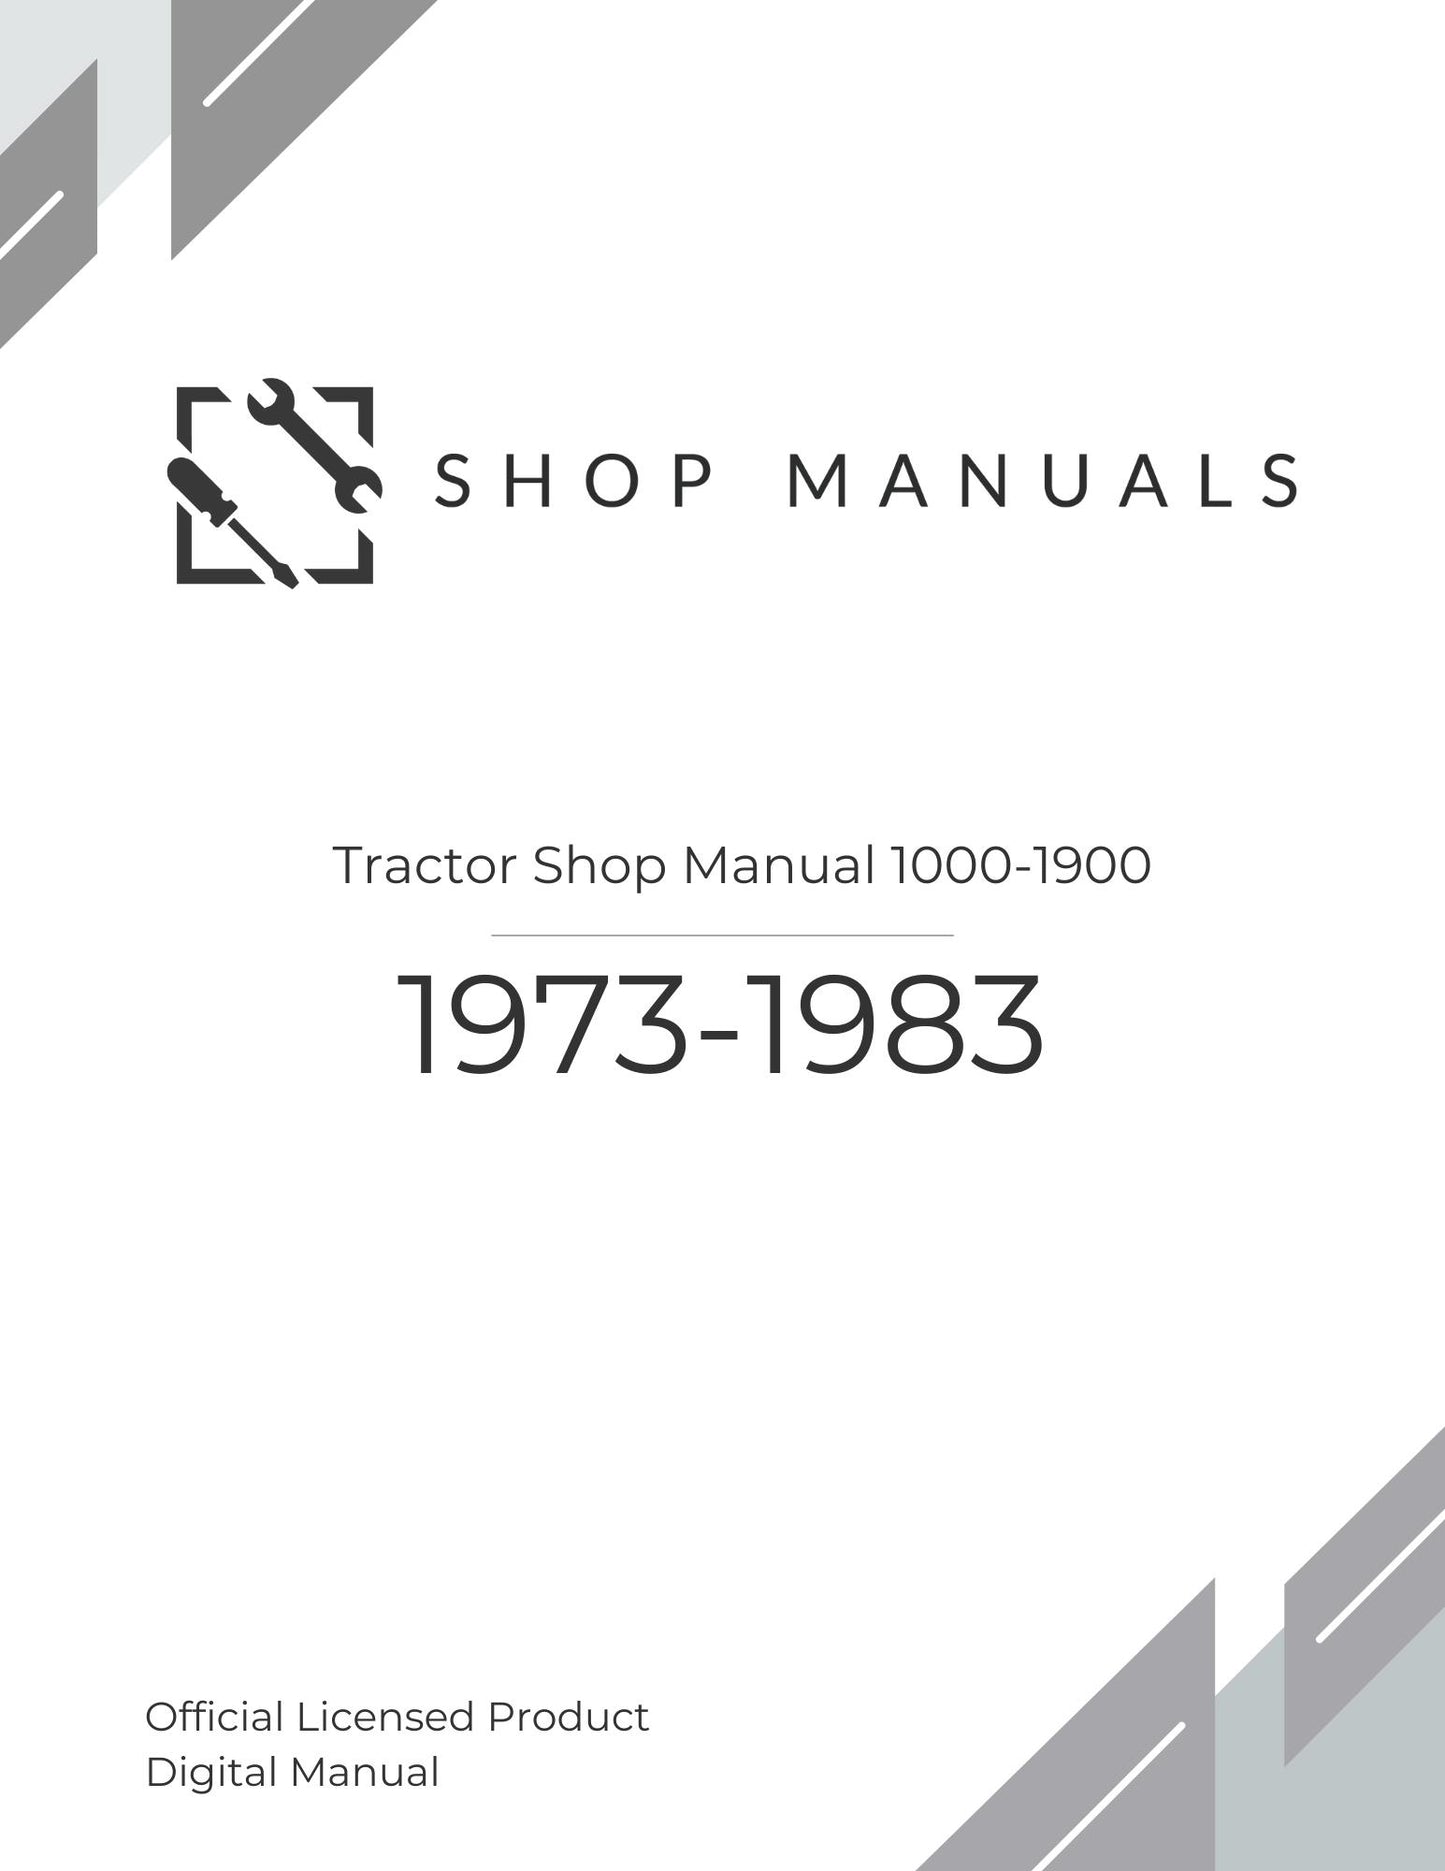 1973-1983 Tractor Shop Manual 1000-1900